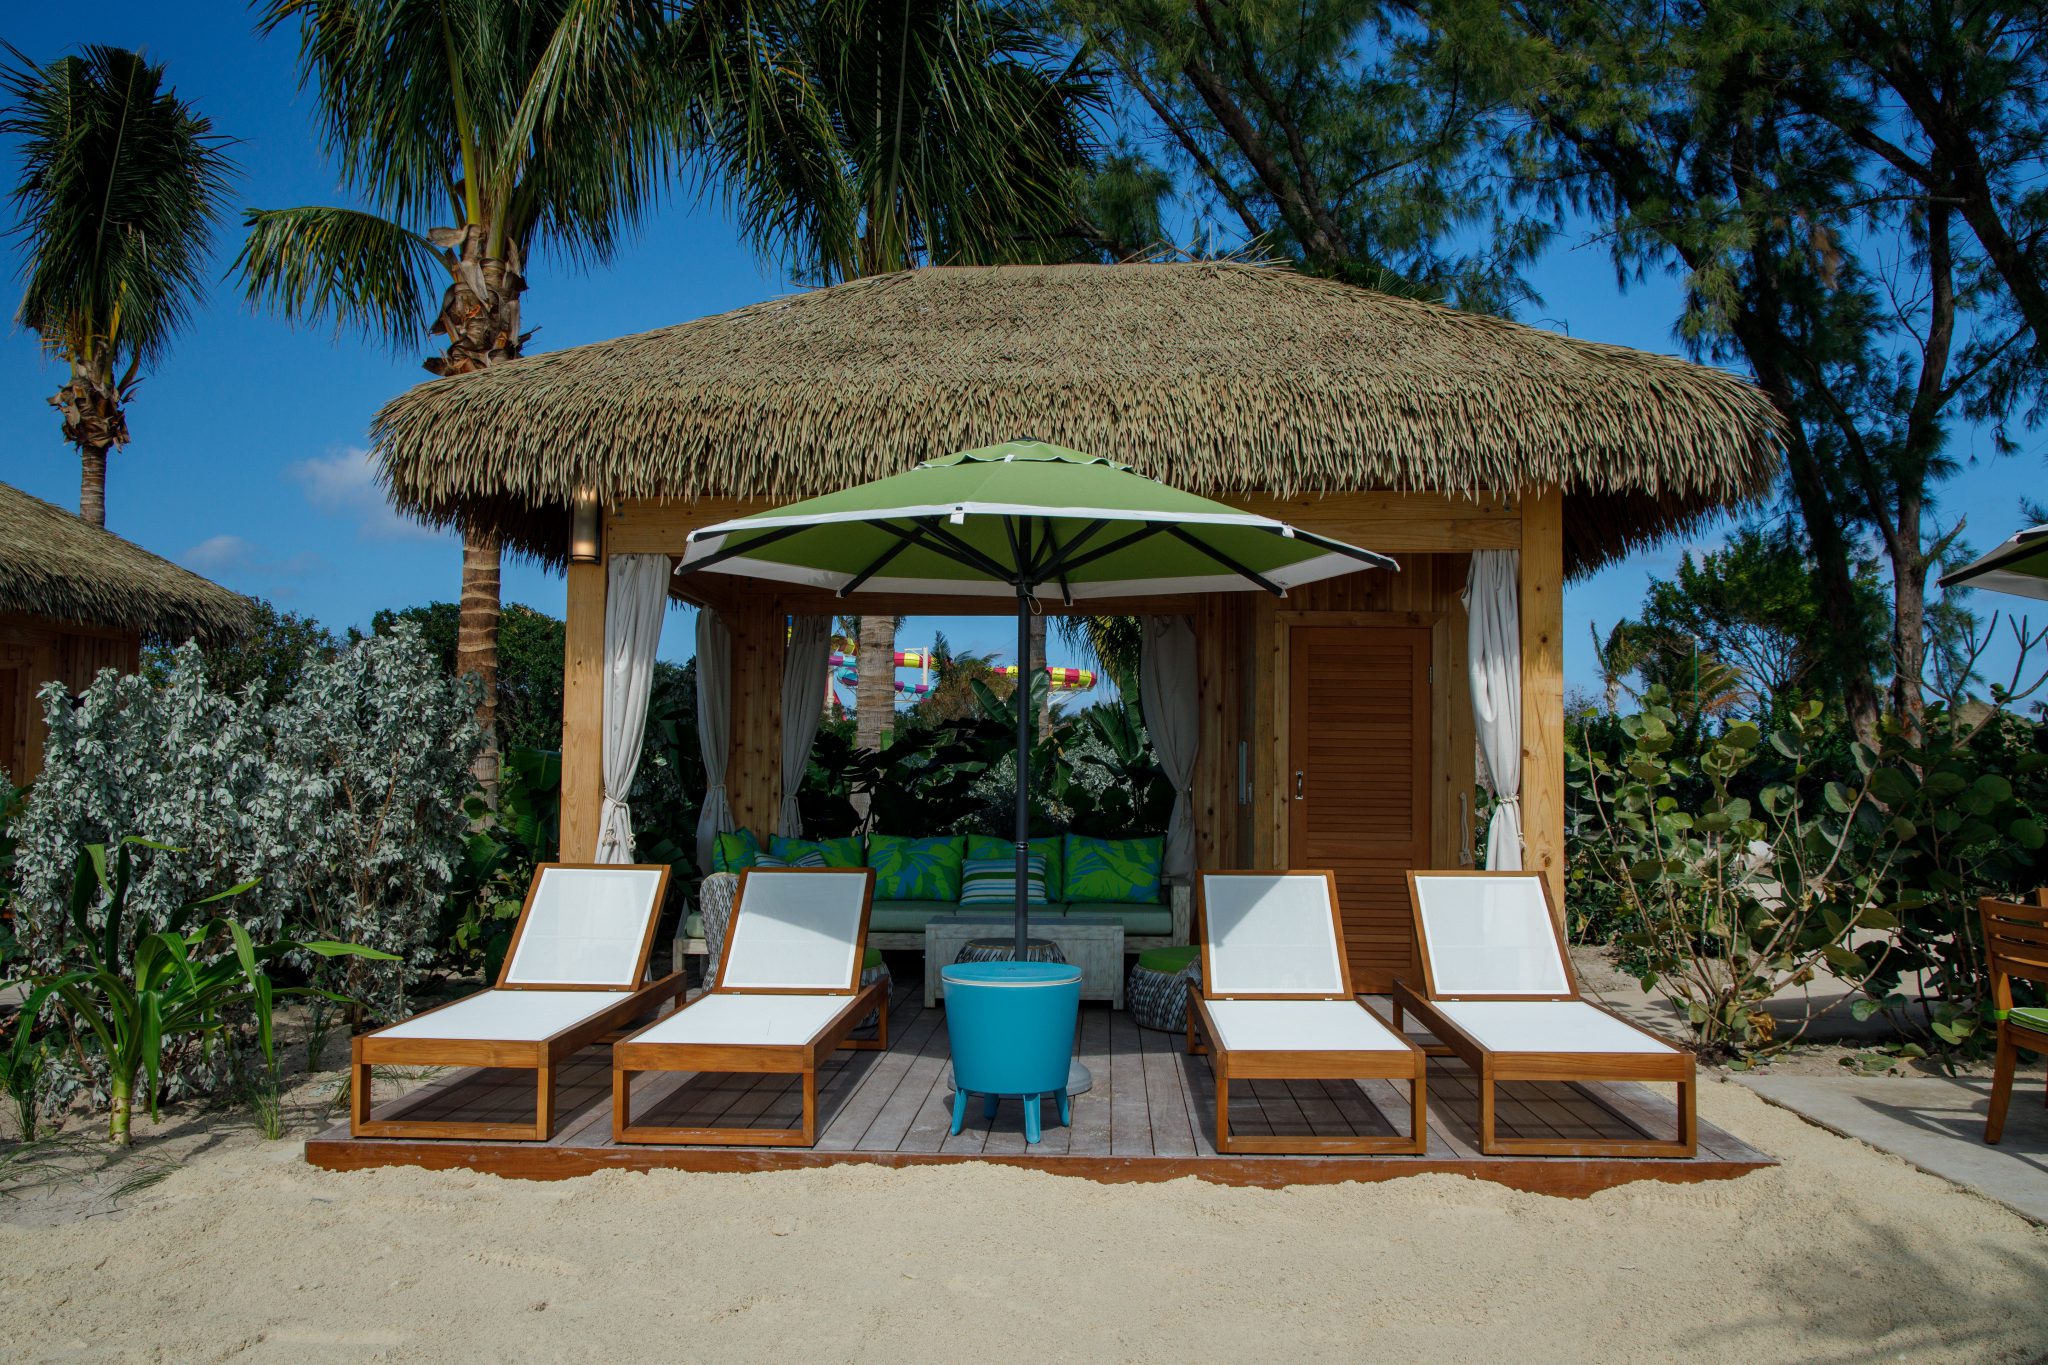 Perfect Day Coco Beach Club beach cabana lounge relax – Onboard Radio